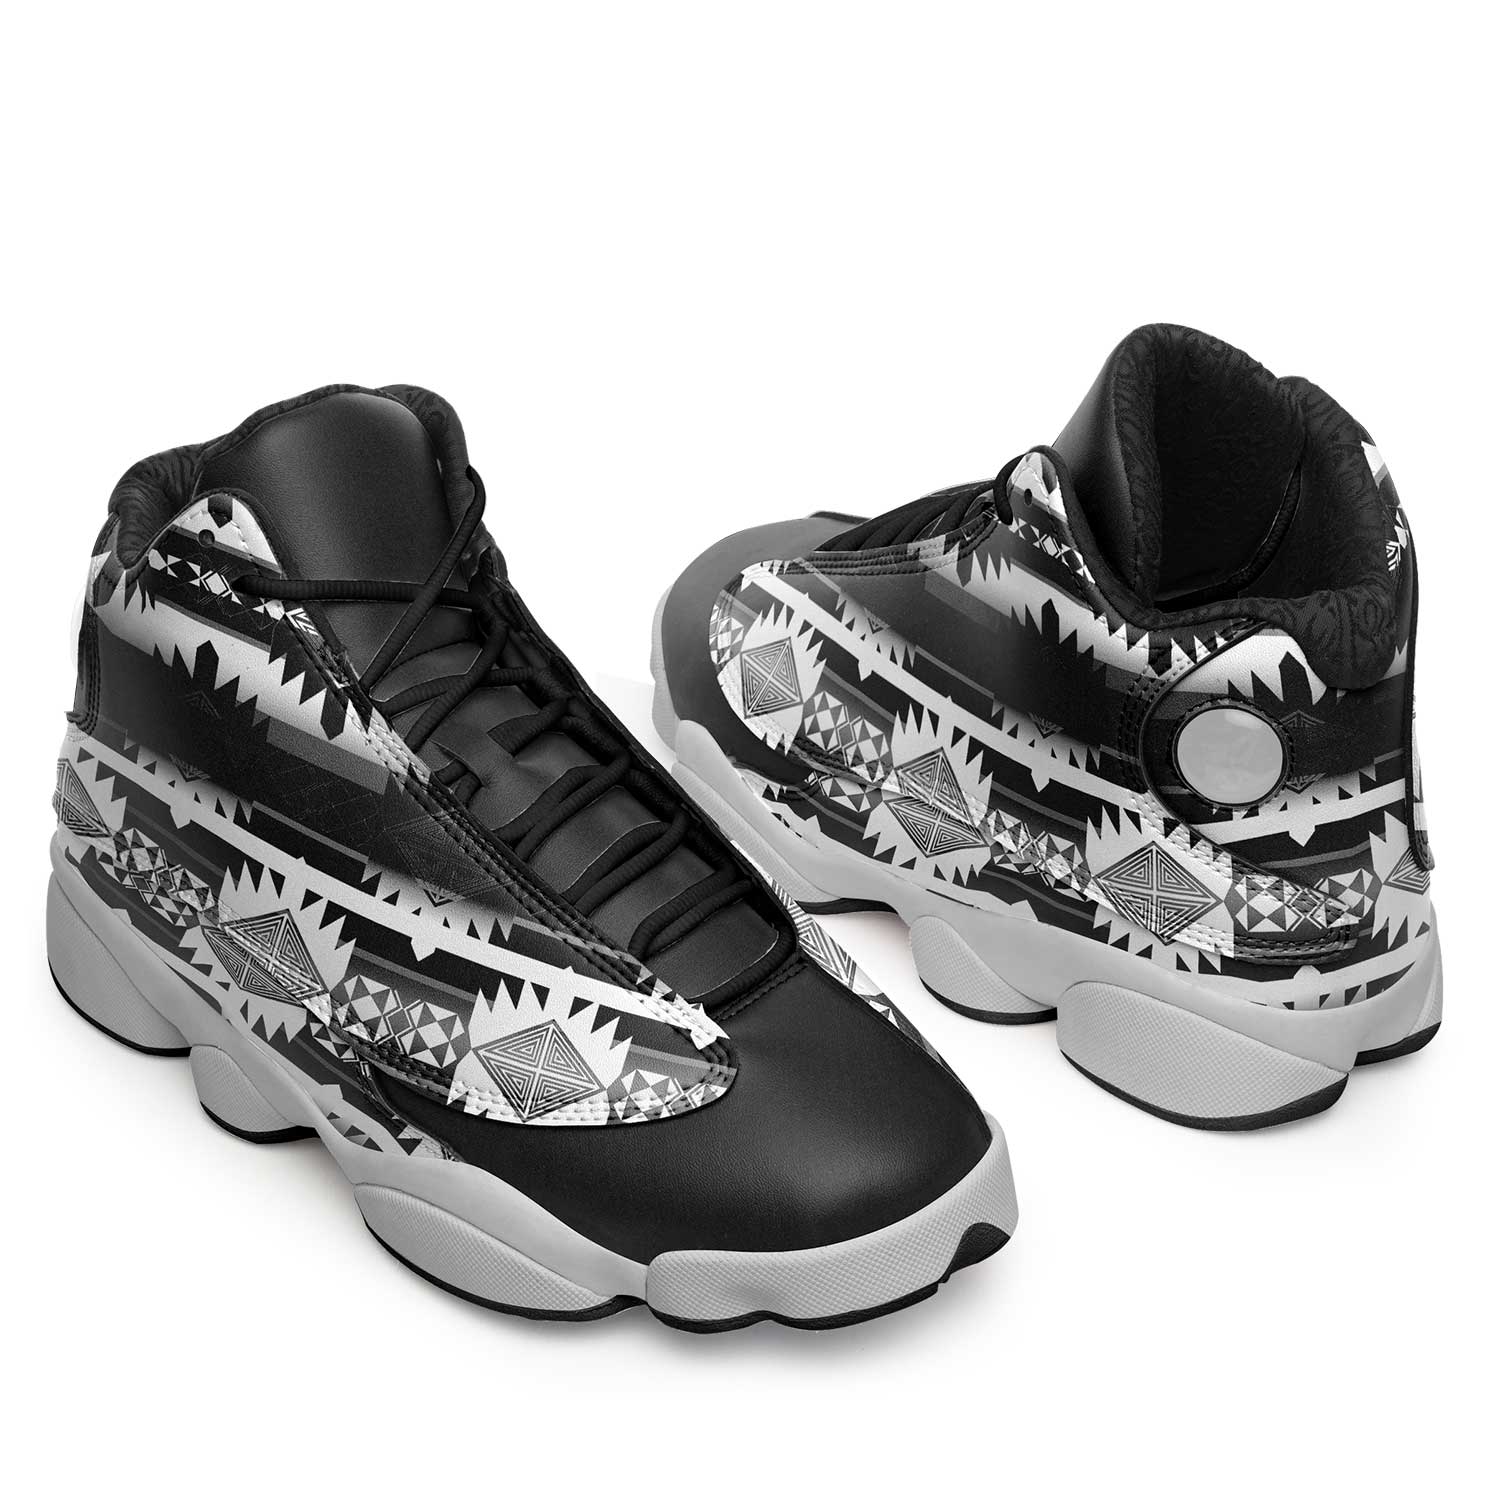 Okotoks Black and White Athletic Shoes Herman 